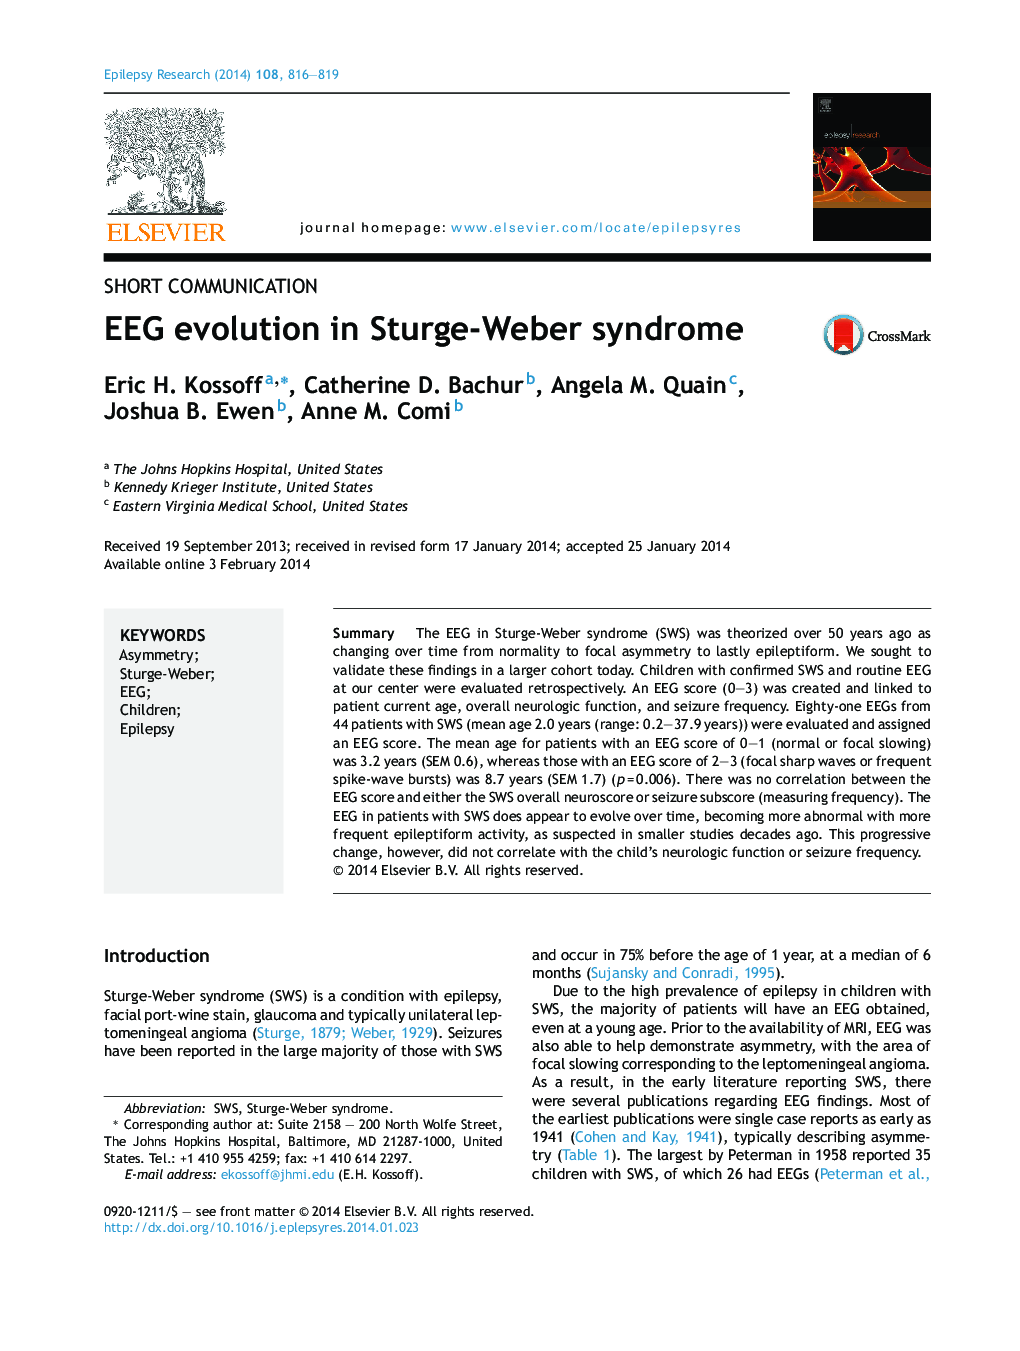 Short communicationEEG evolution in Sturge-Weber syndrome